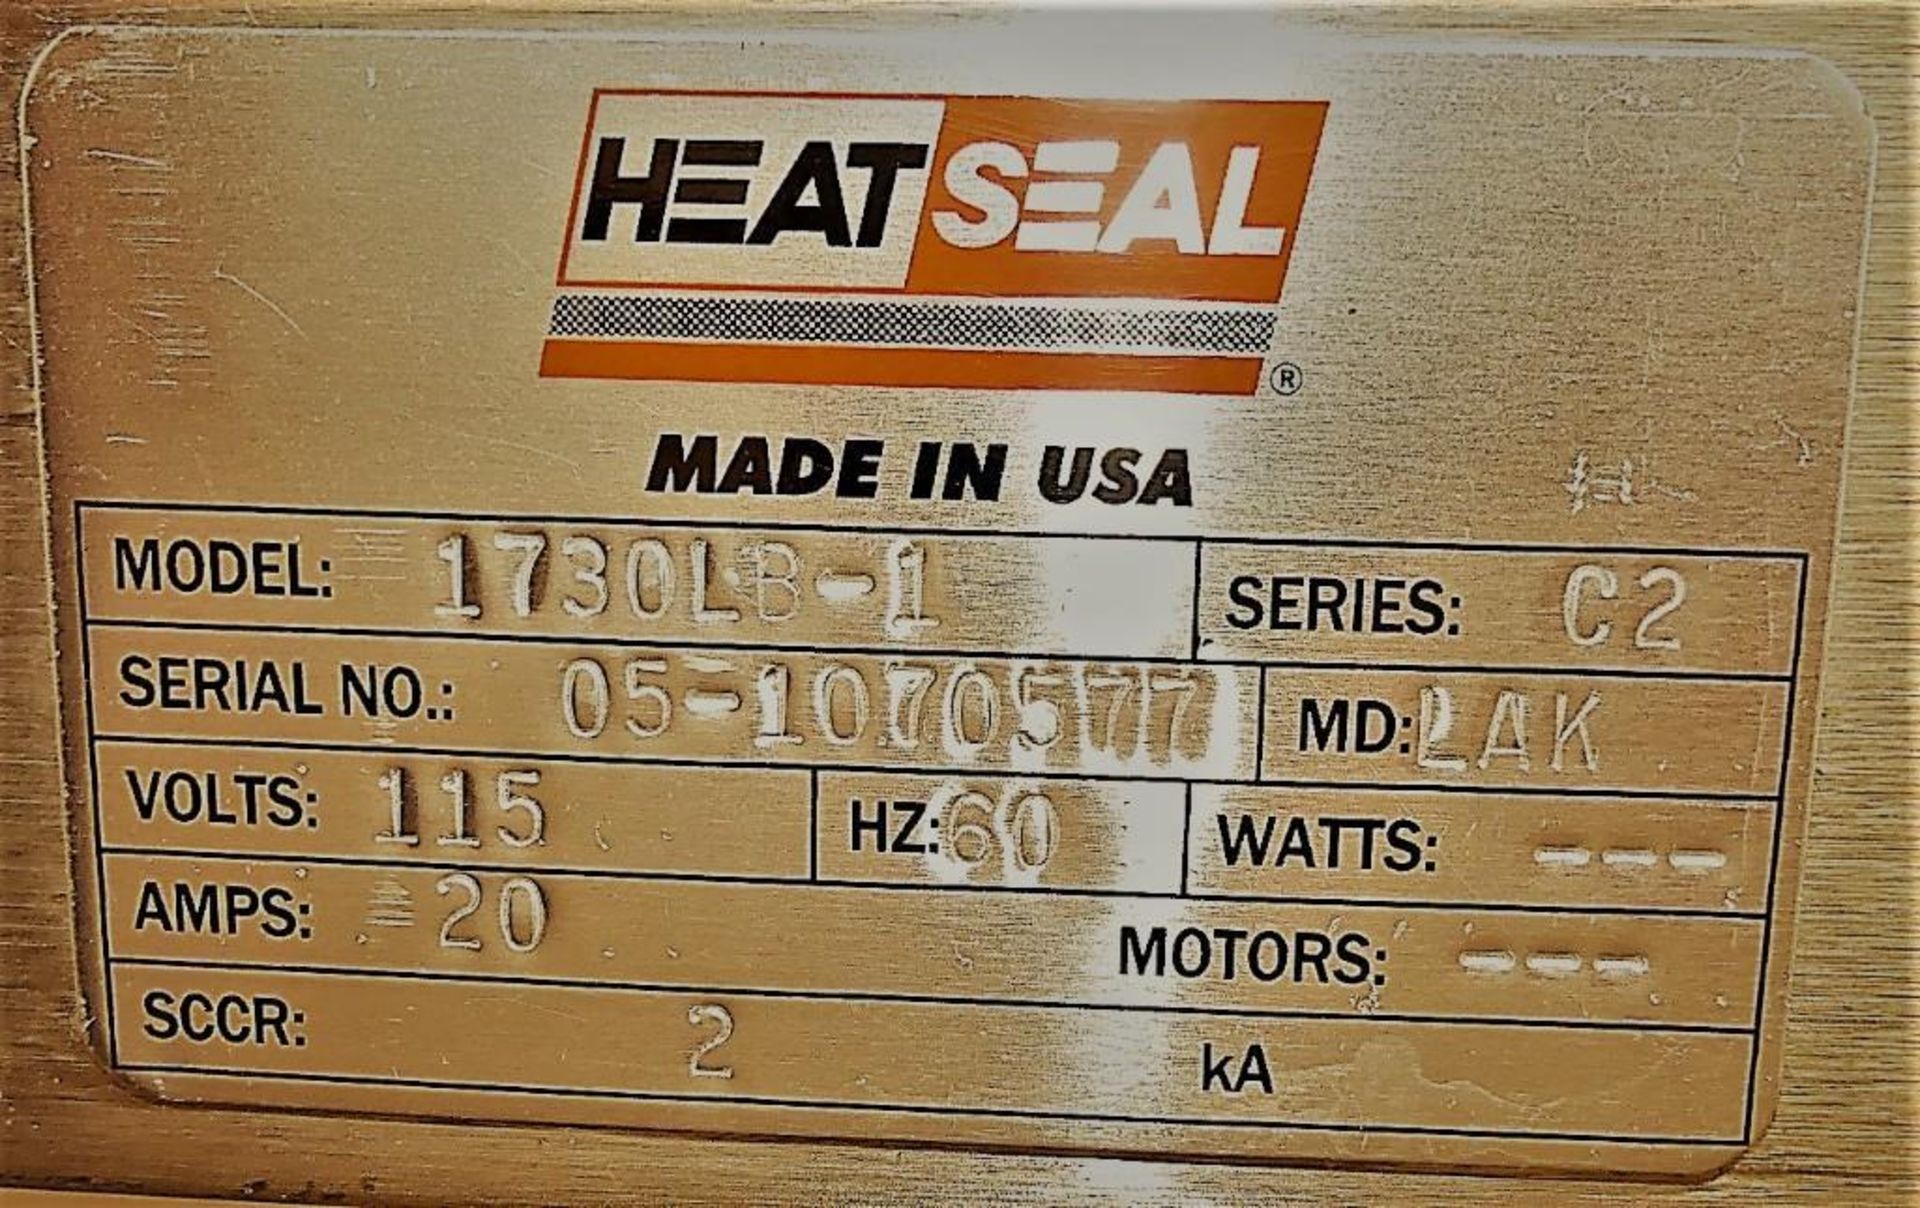 Heat Seal 1730LB-1 Manual L Bar Sealer - Image 6 of 6